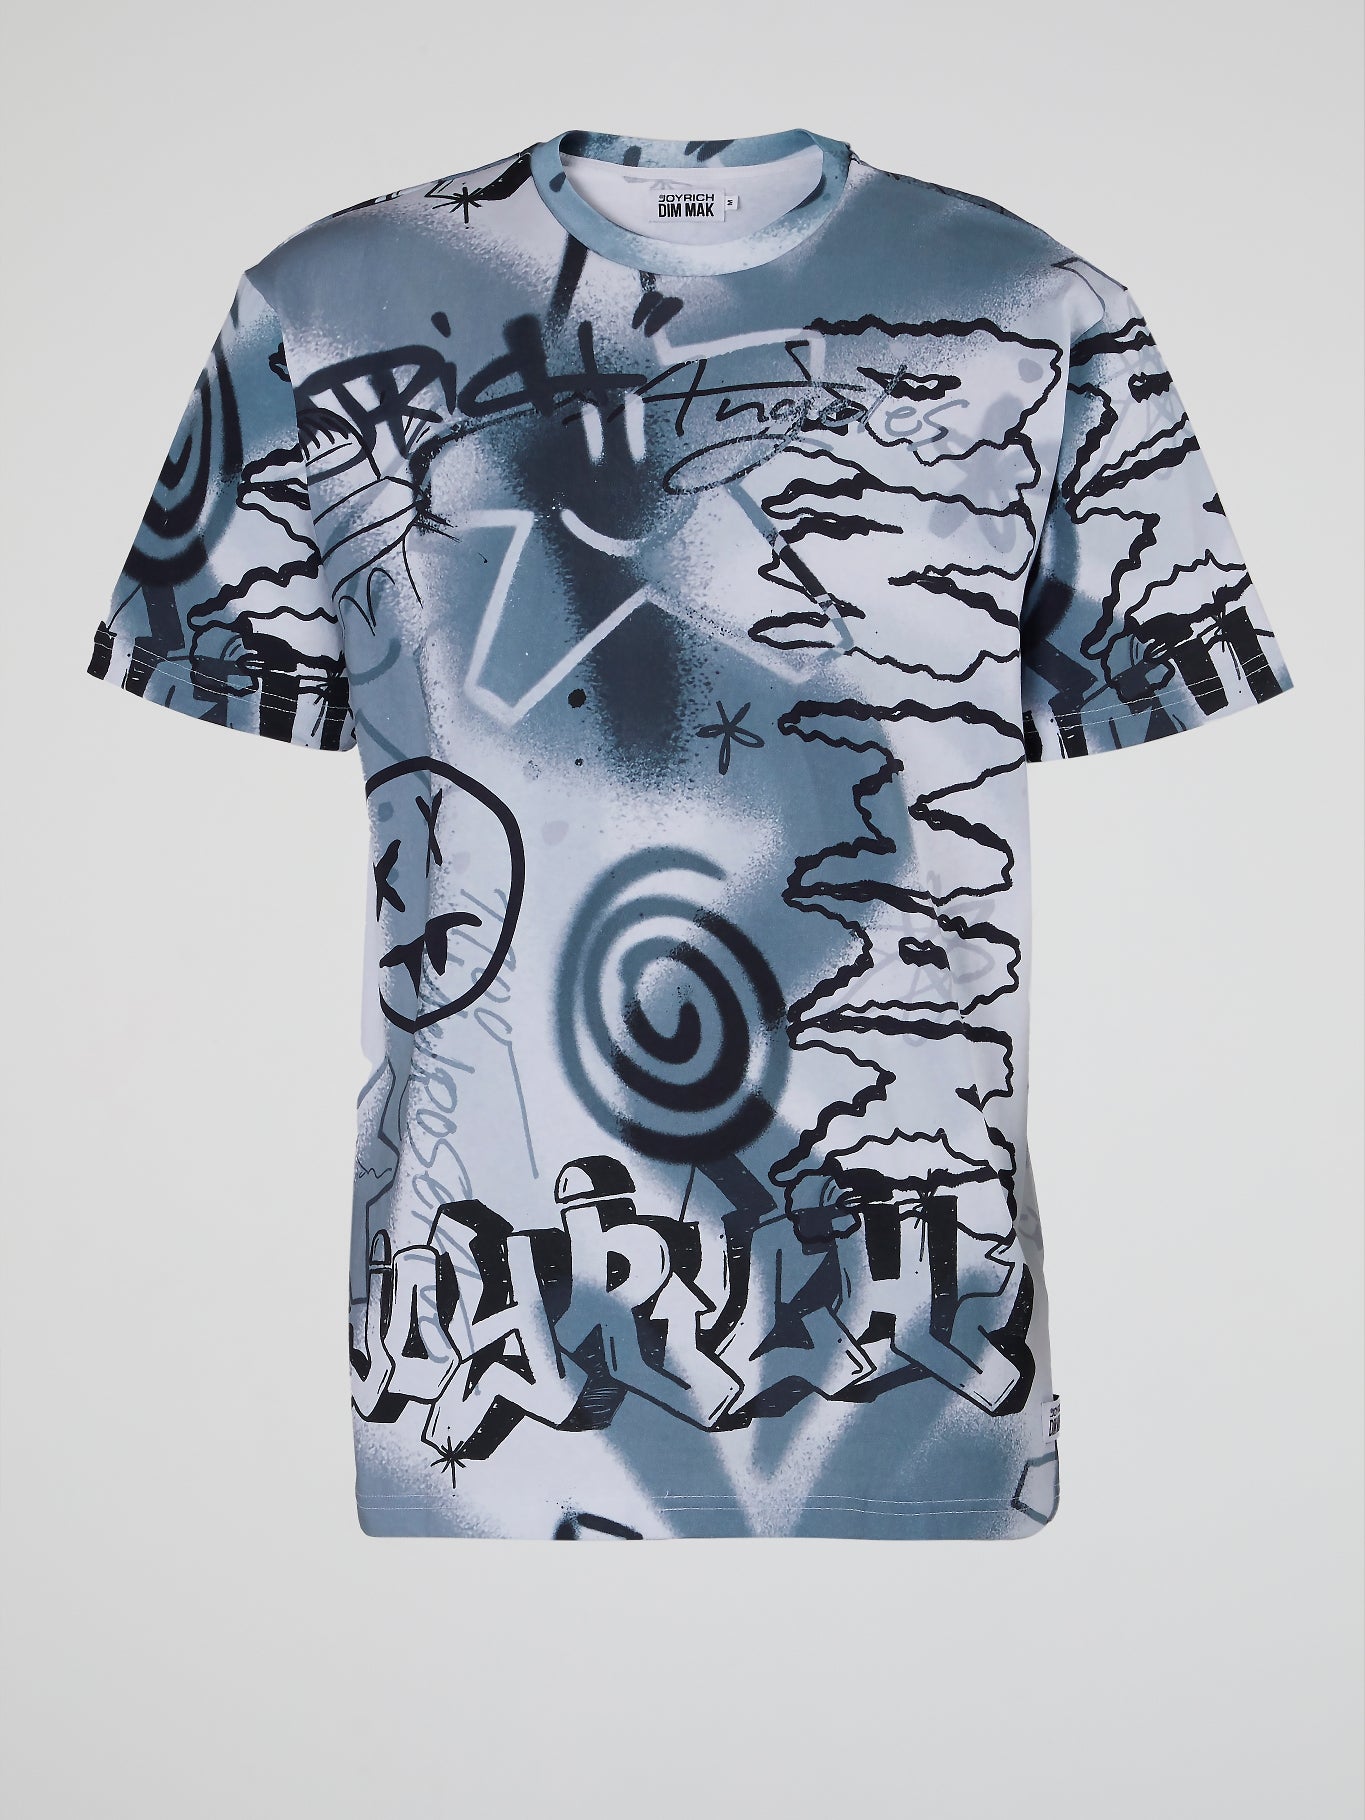 Joyrich x Dim Mak Monochrome Graffiti T-Shirt – Maison-B-More